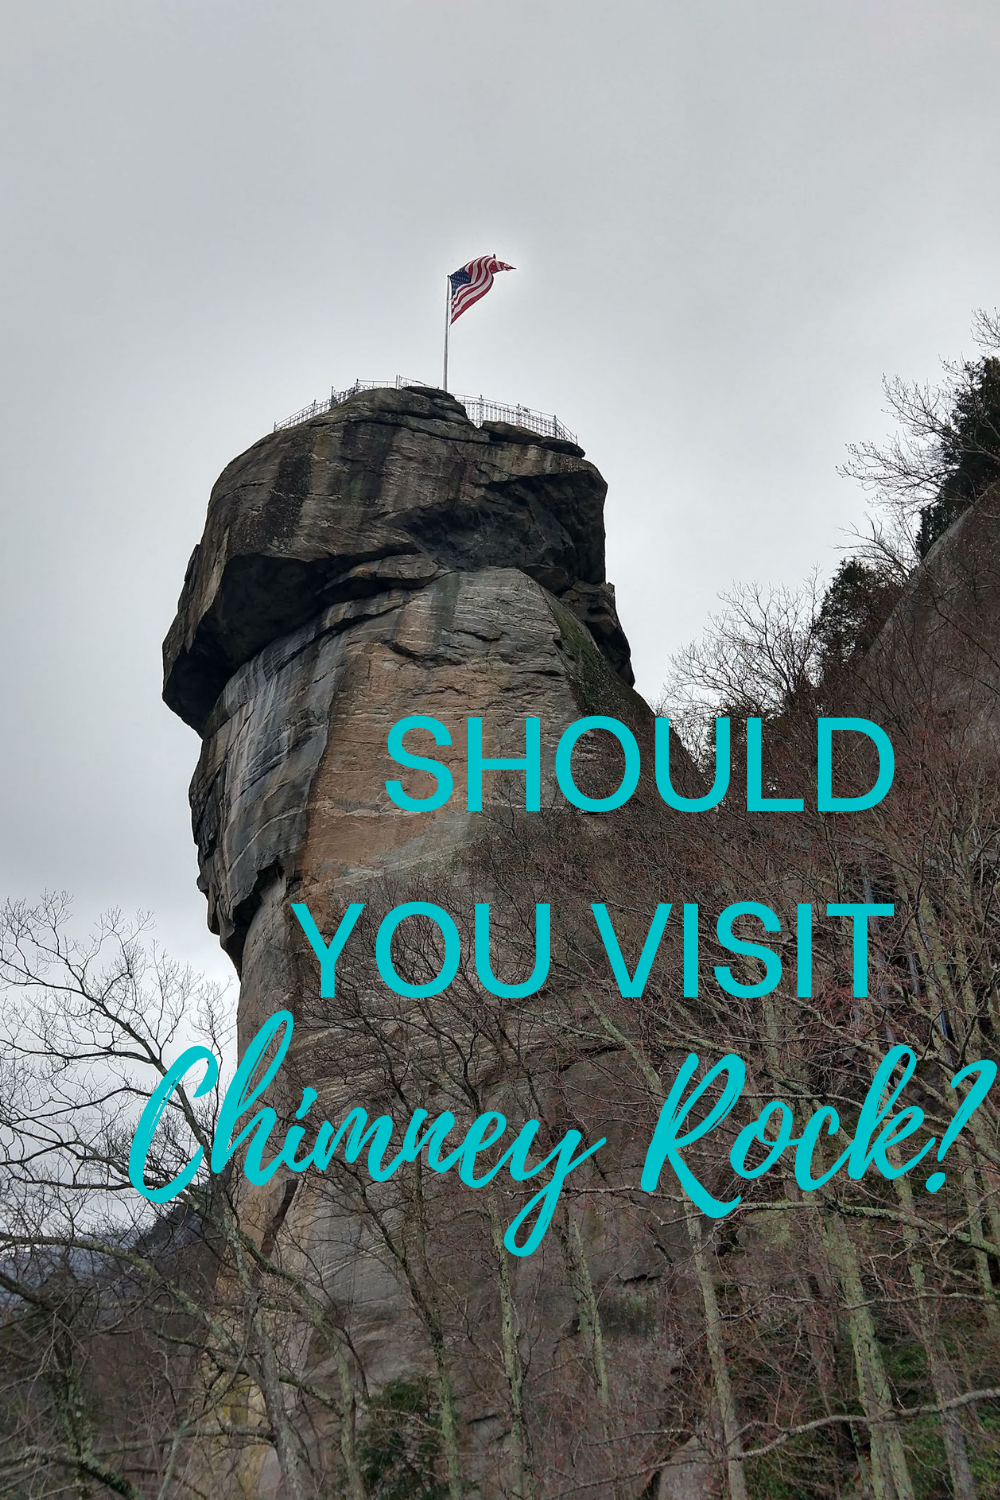 Chimney Rock State Park – Eagle Rock Access